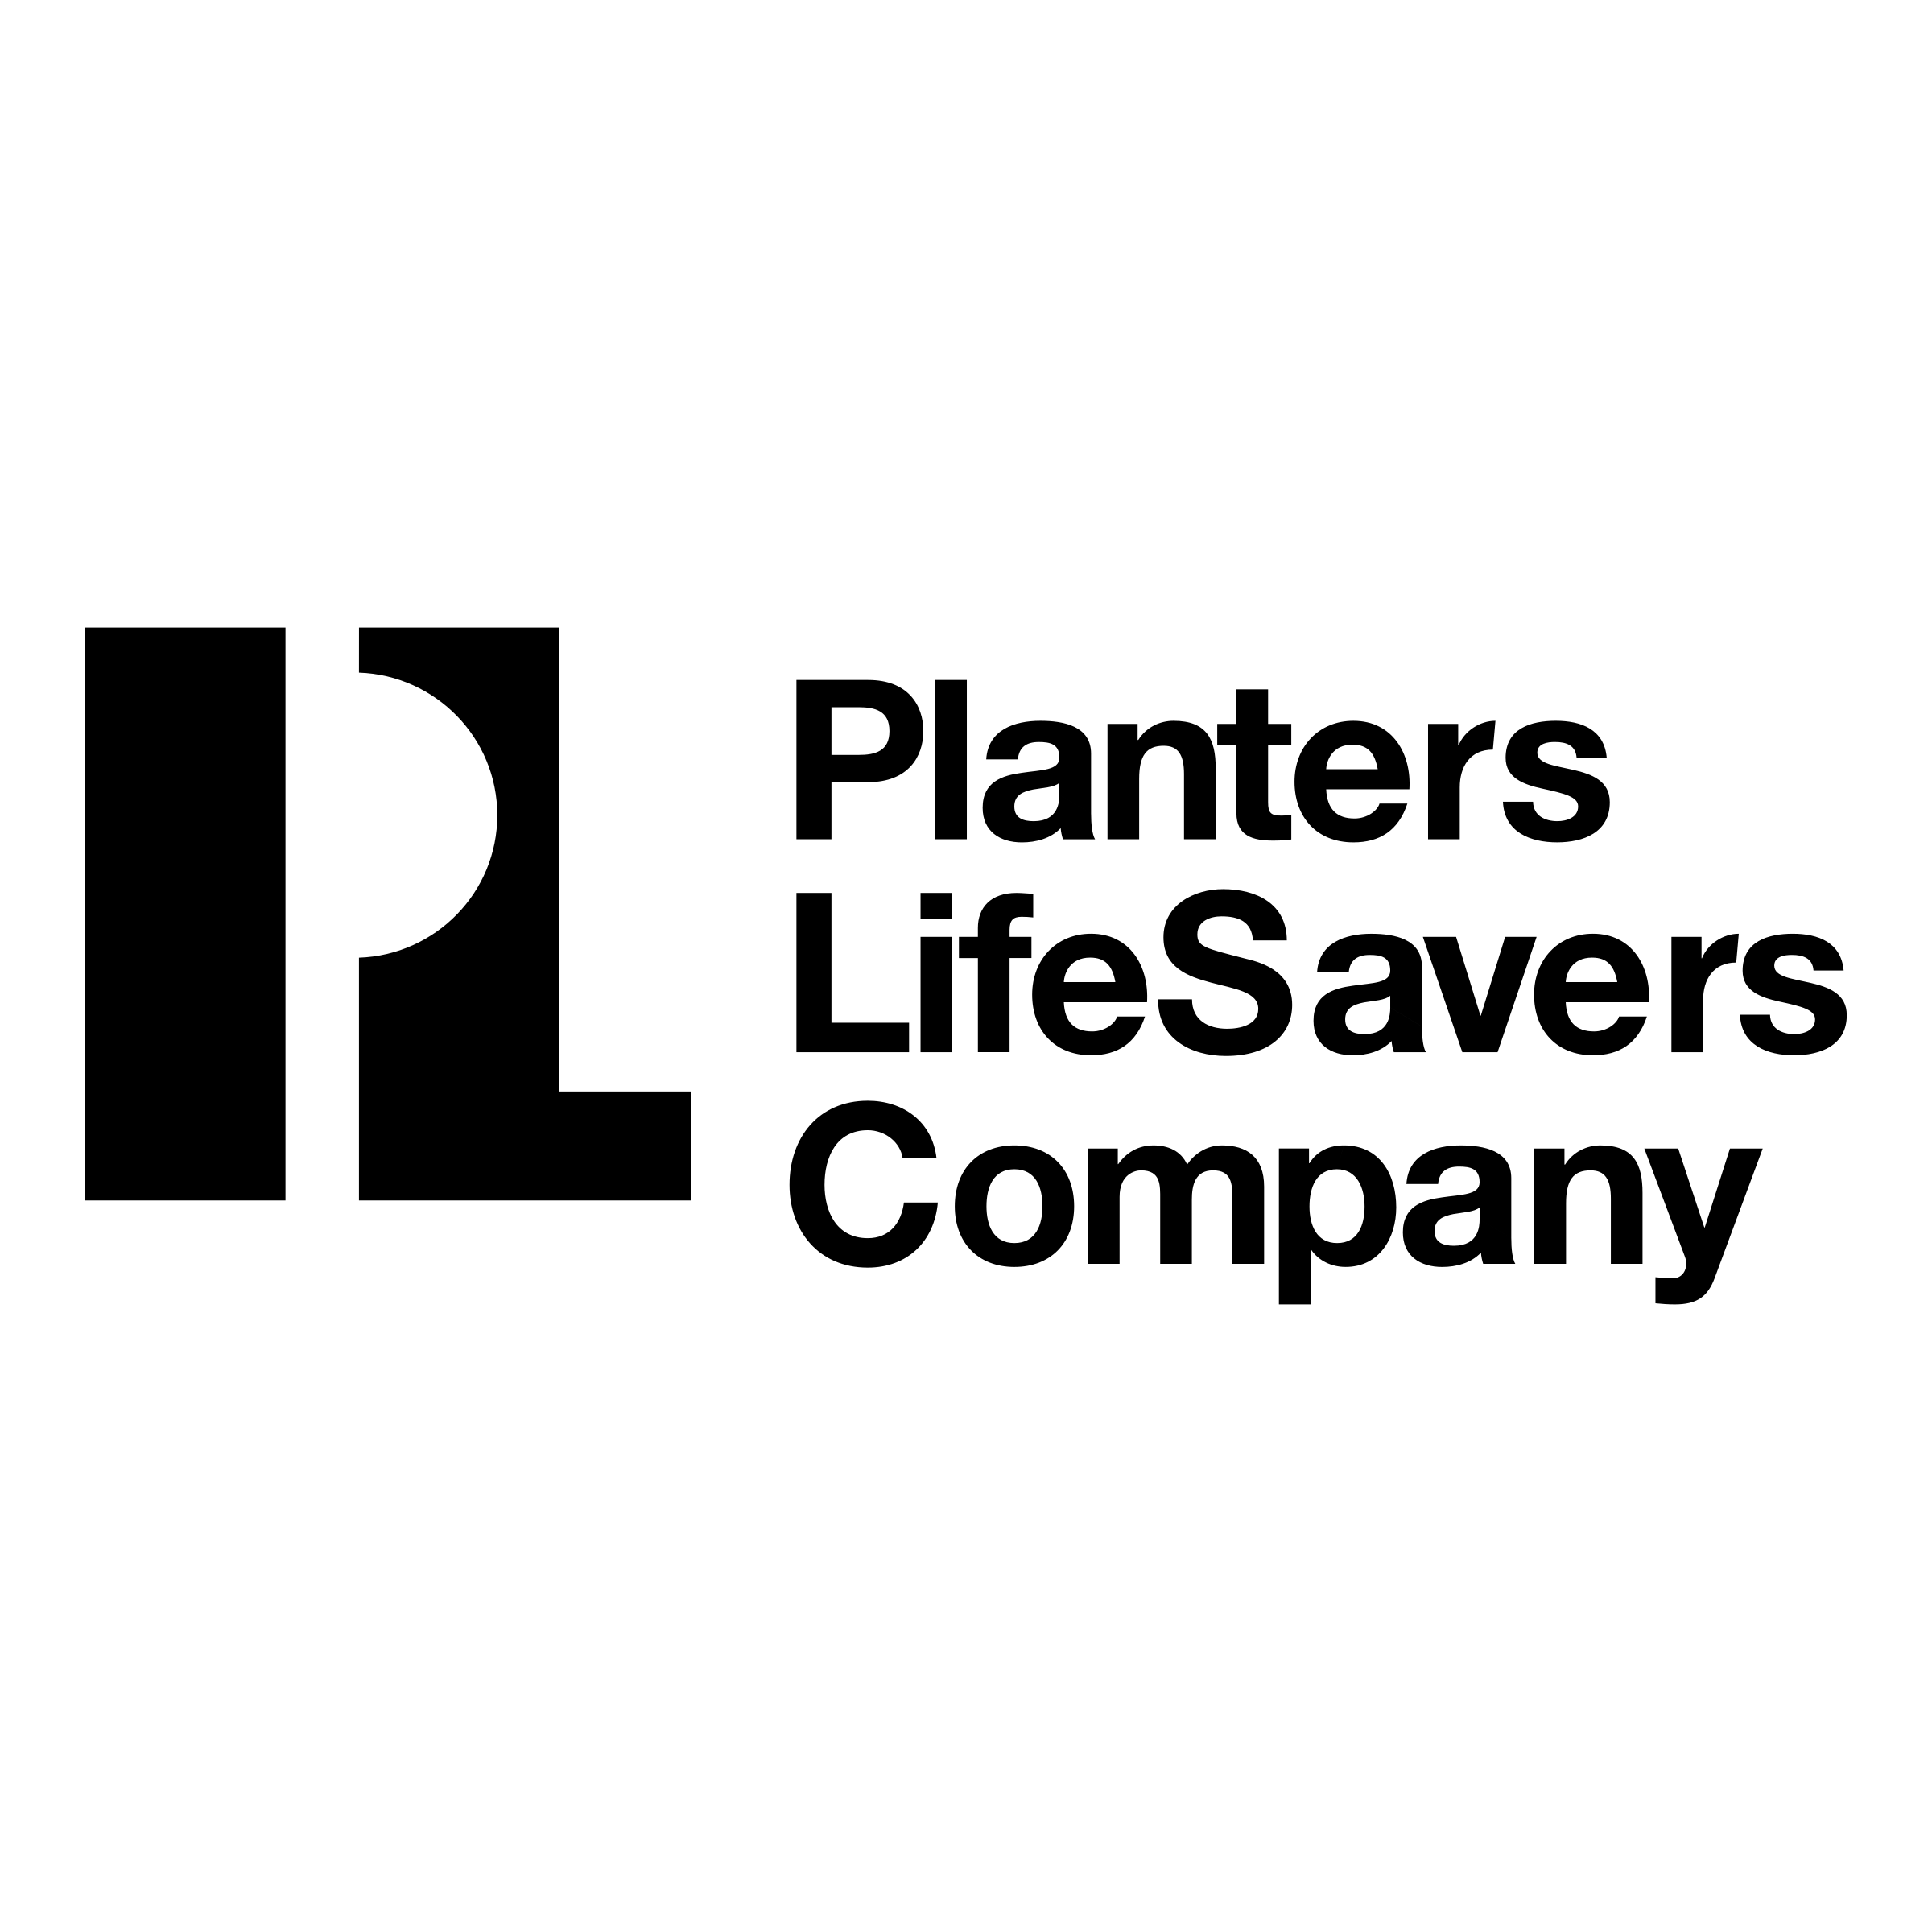 White Planters Logo - Planters LifeSaver Company Logo PNG Transparent & SVG Vector